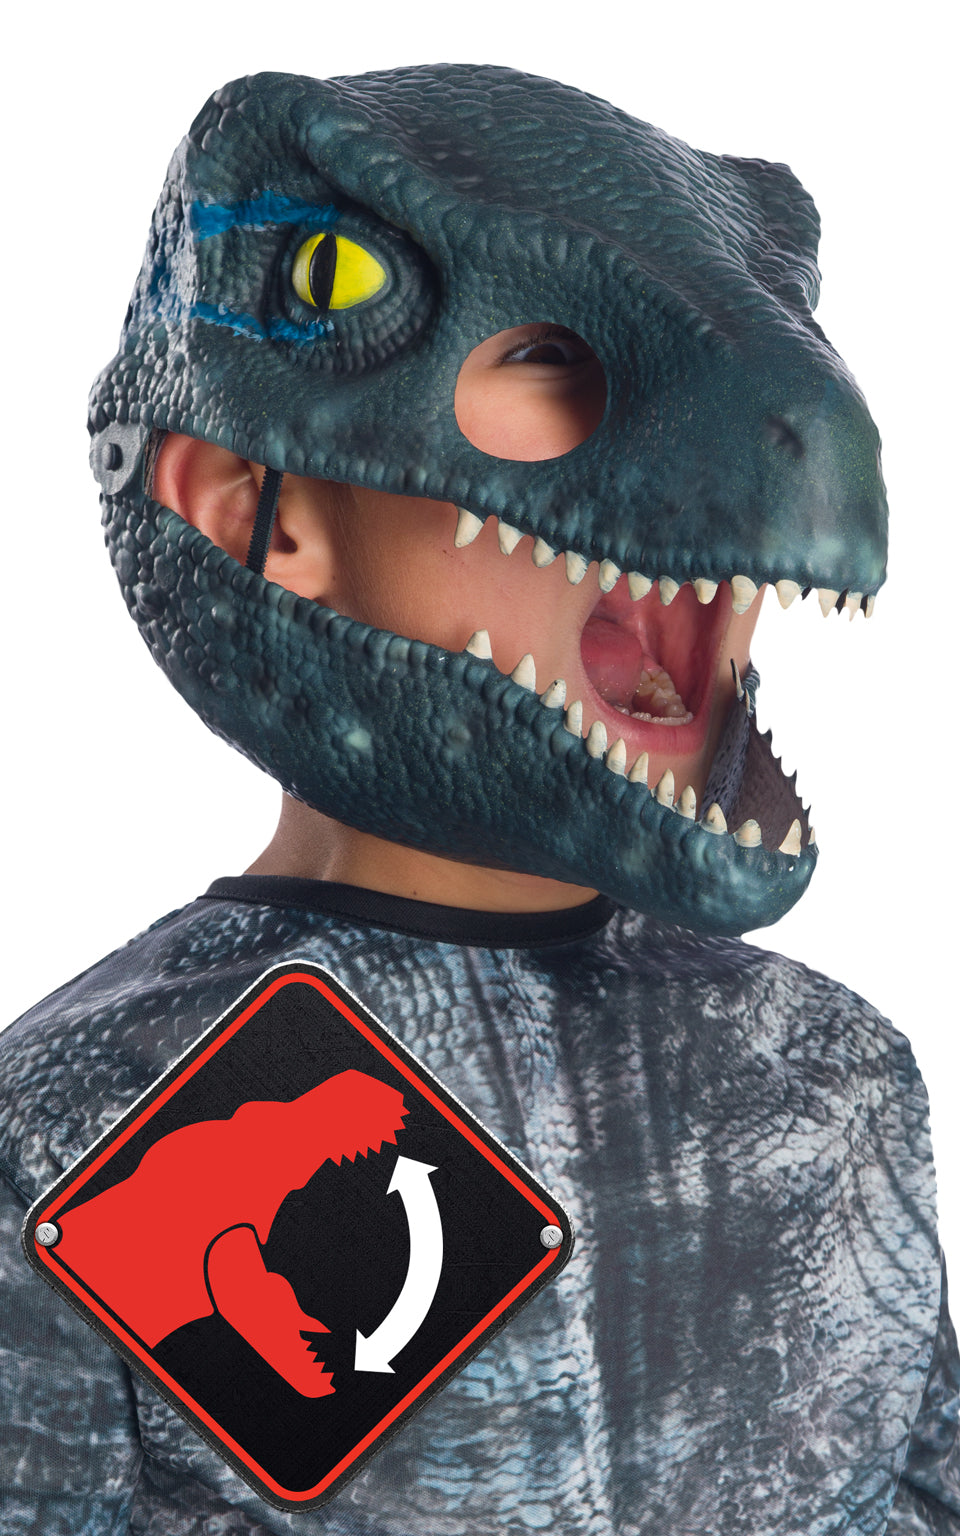 Velociraptor "Blue" Movable Jaw Mask Dinosaur Accessory